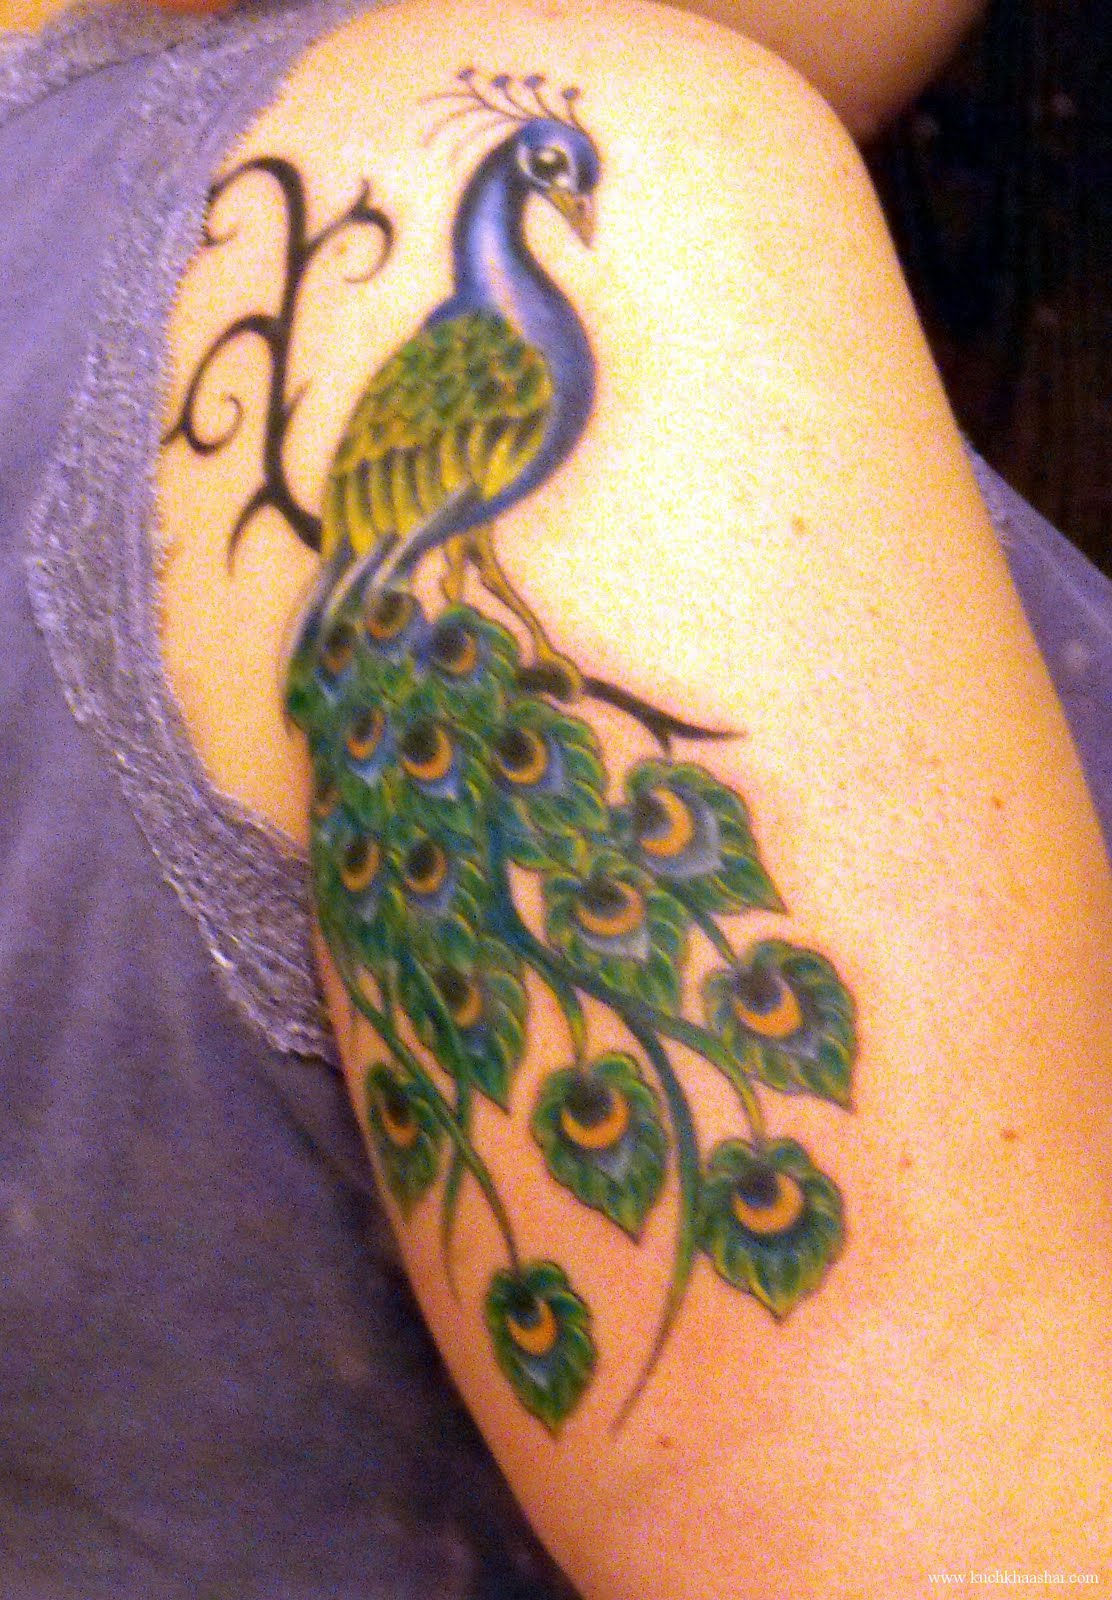 Peacock Feather Tattoo On Arm Tumblr.